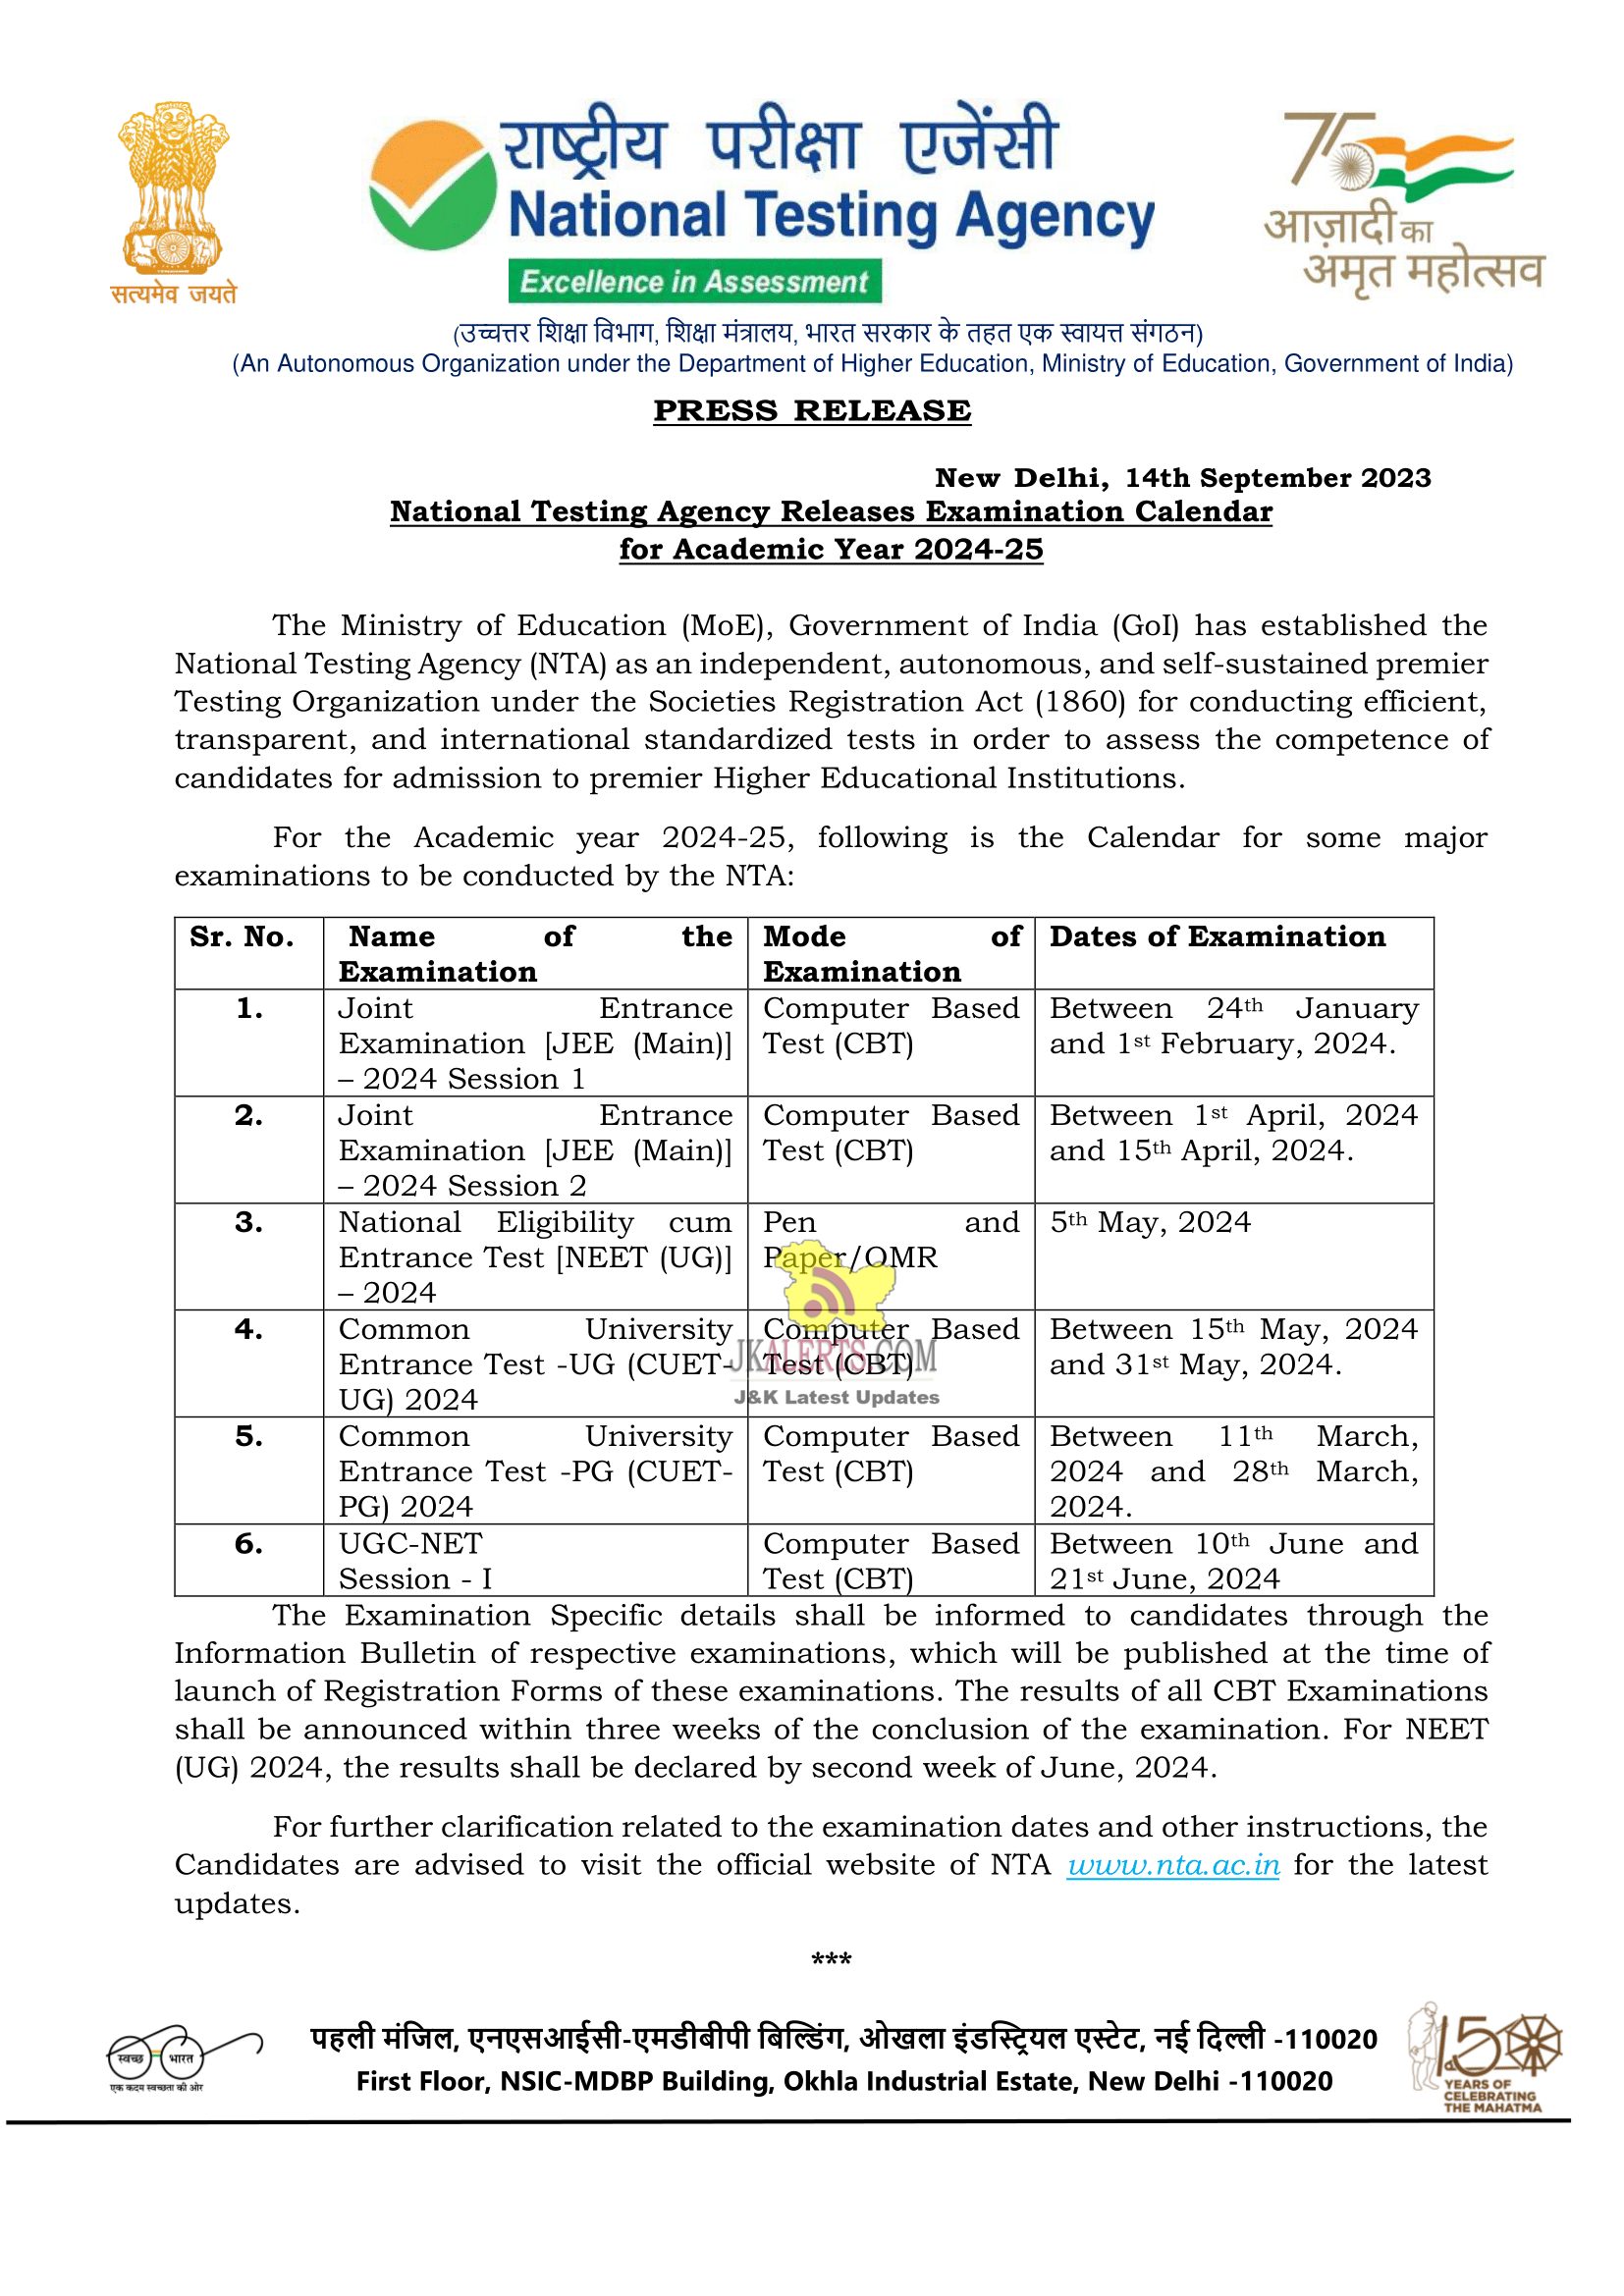 National Testing Agency (NTA) releases Examination Calendar.